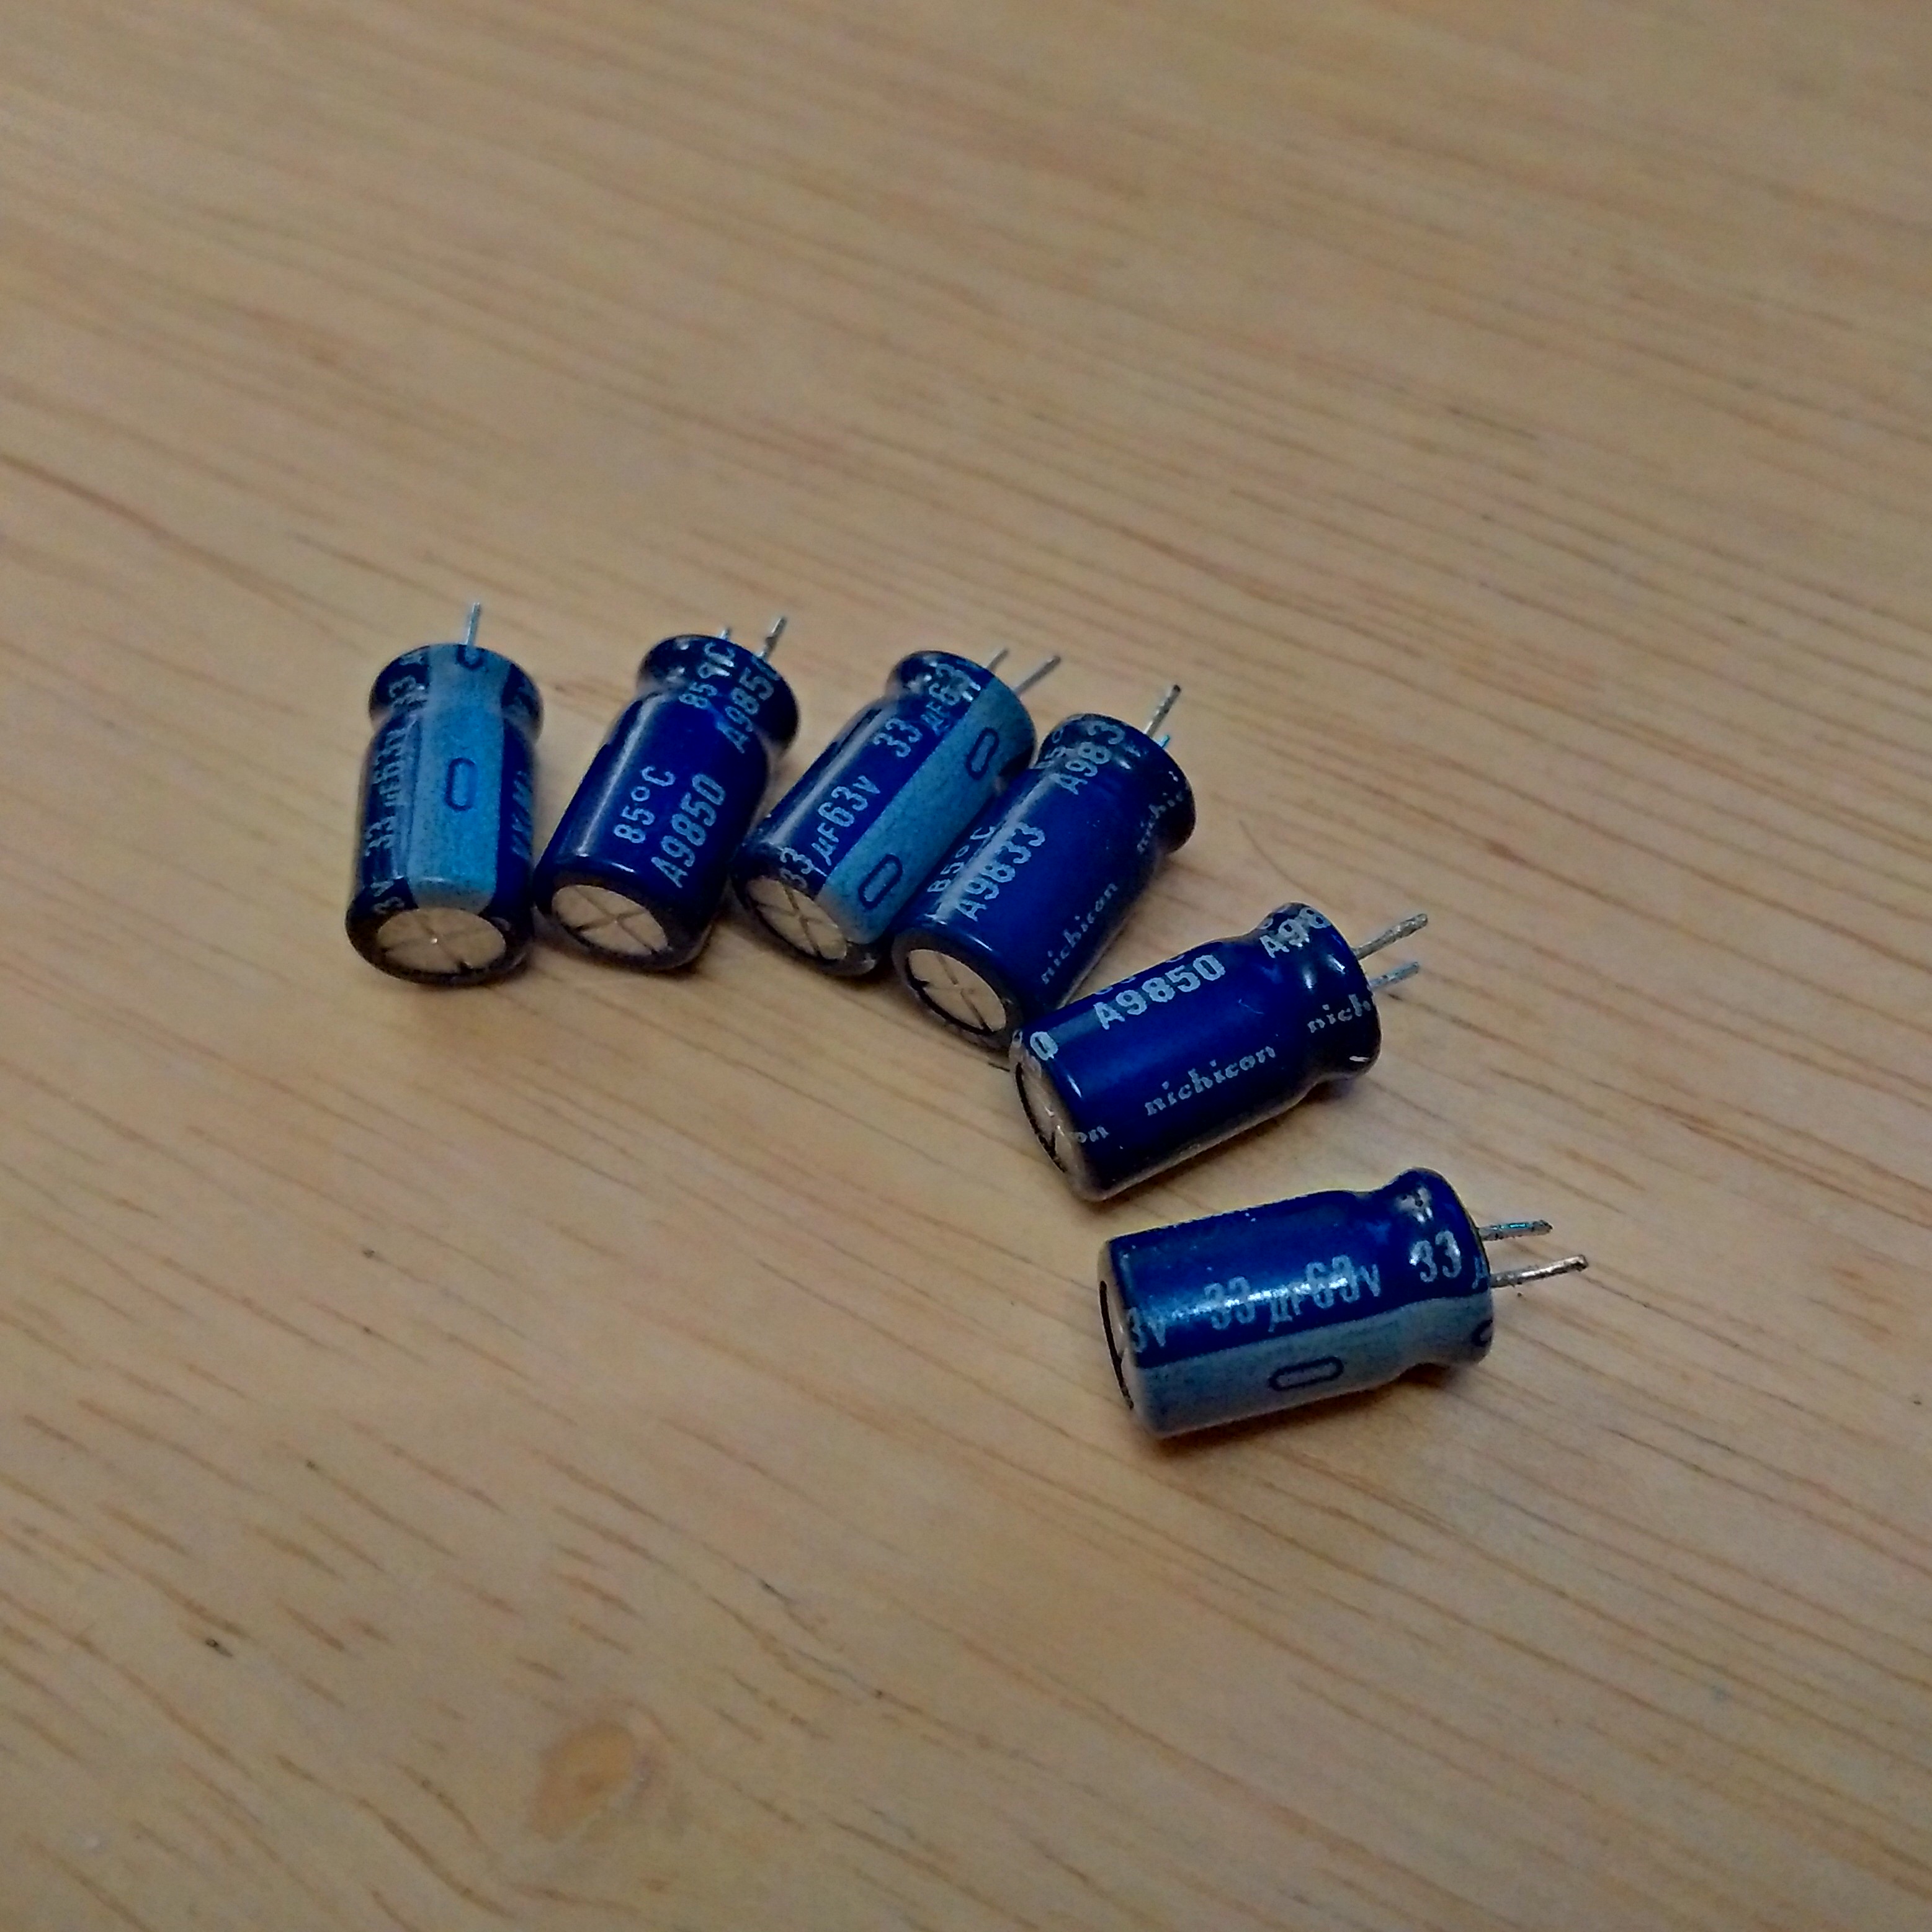 The six capacitors that didn't leak